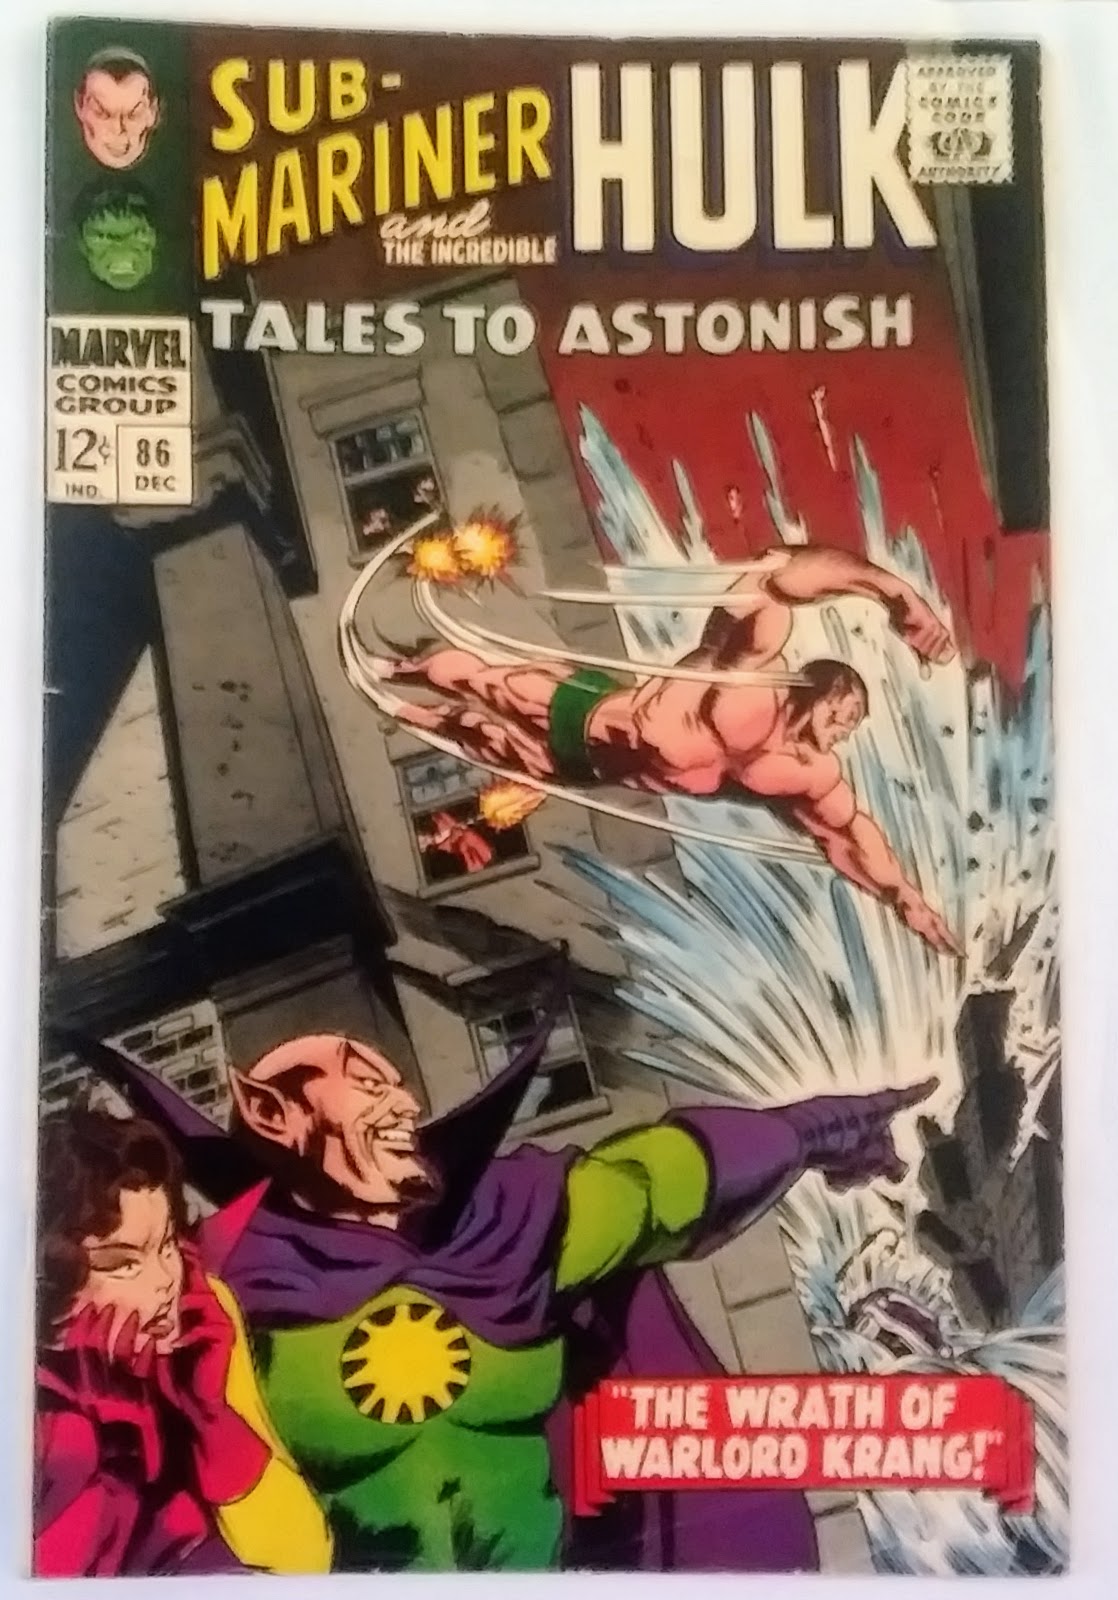 Tales to Astonish #086, Marvel Comics (December 1966)